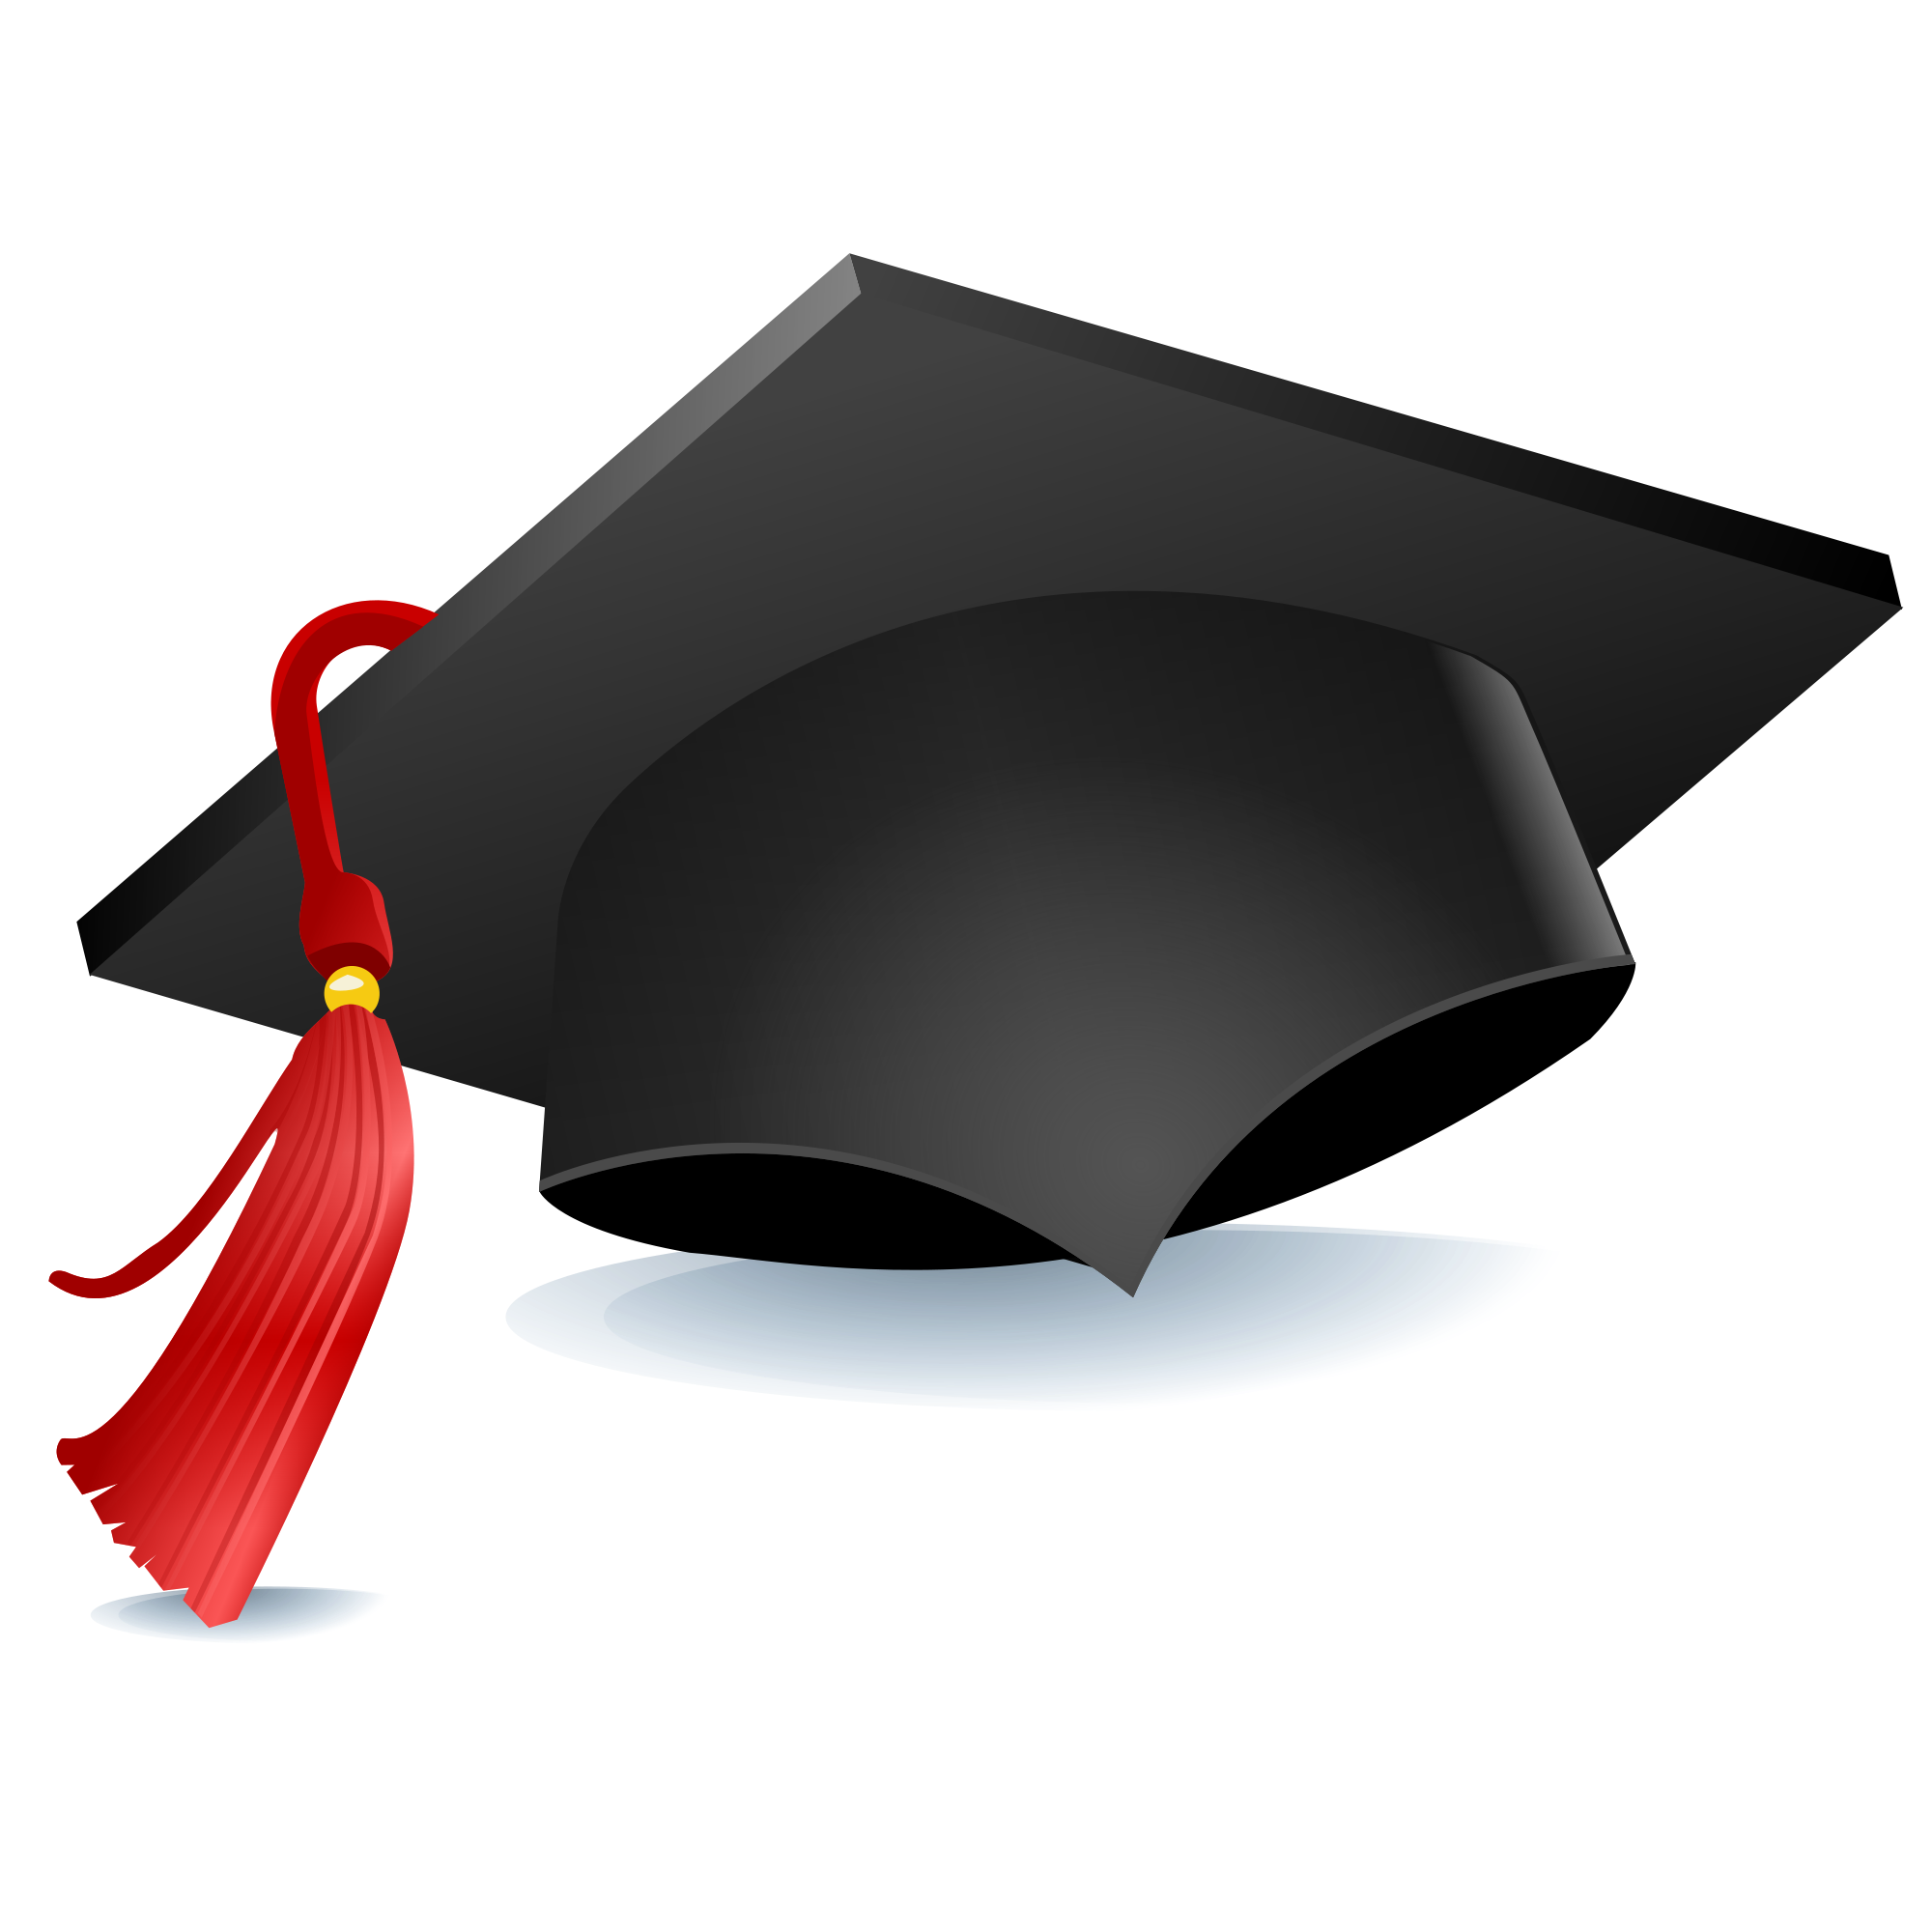 File:Graduation cap.png - Wikimedia Commons